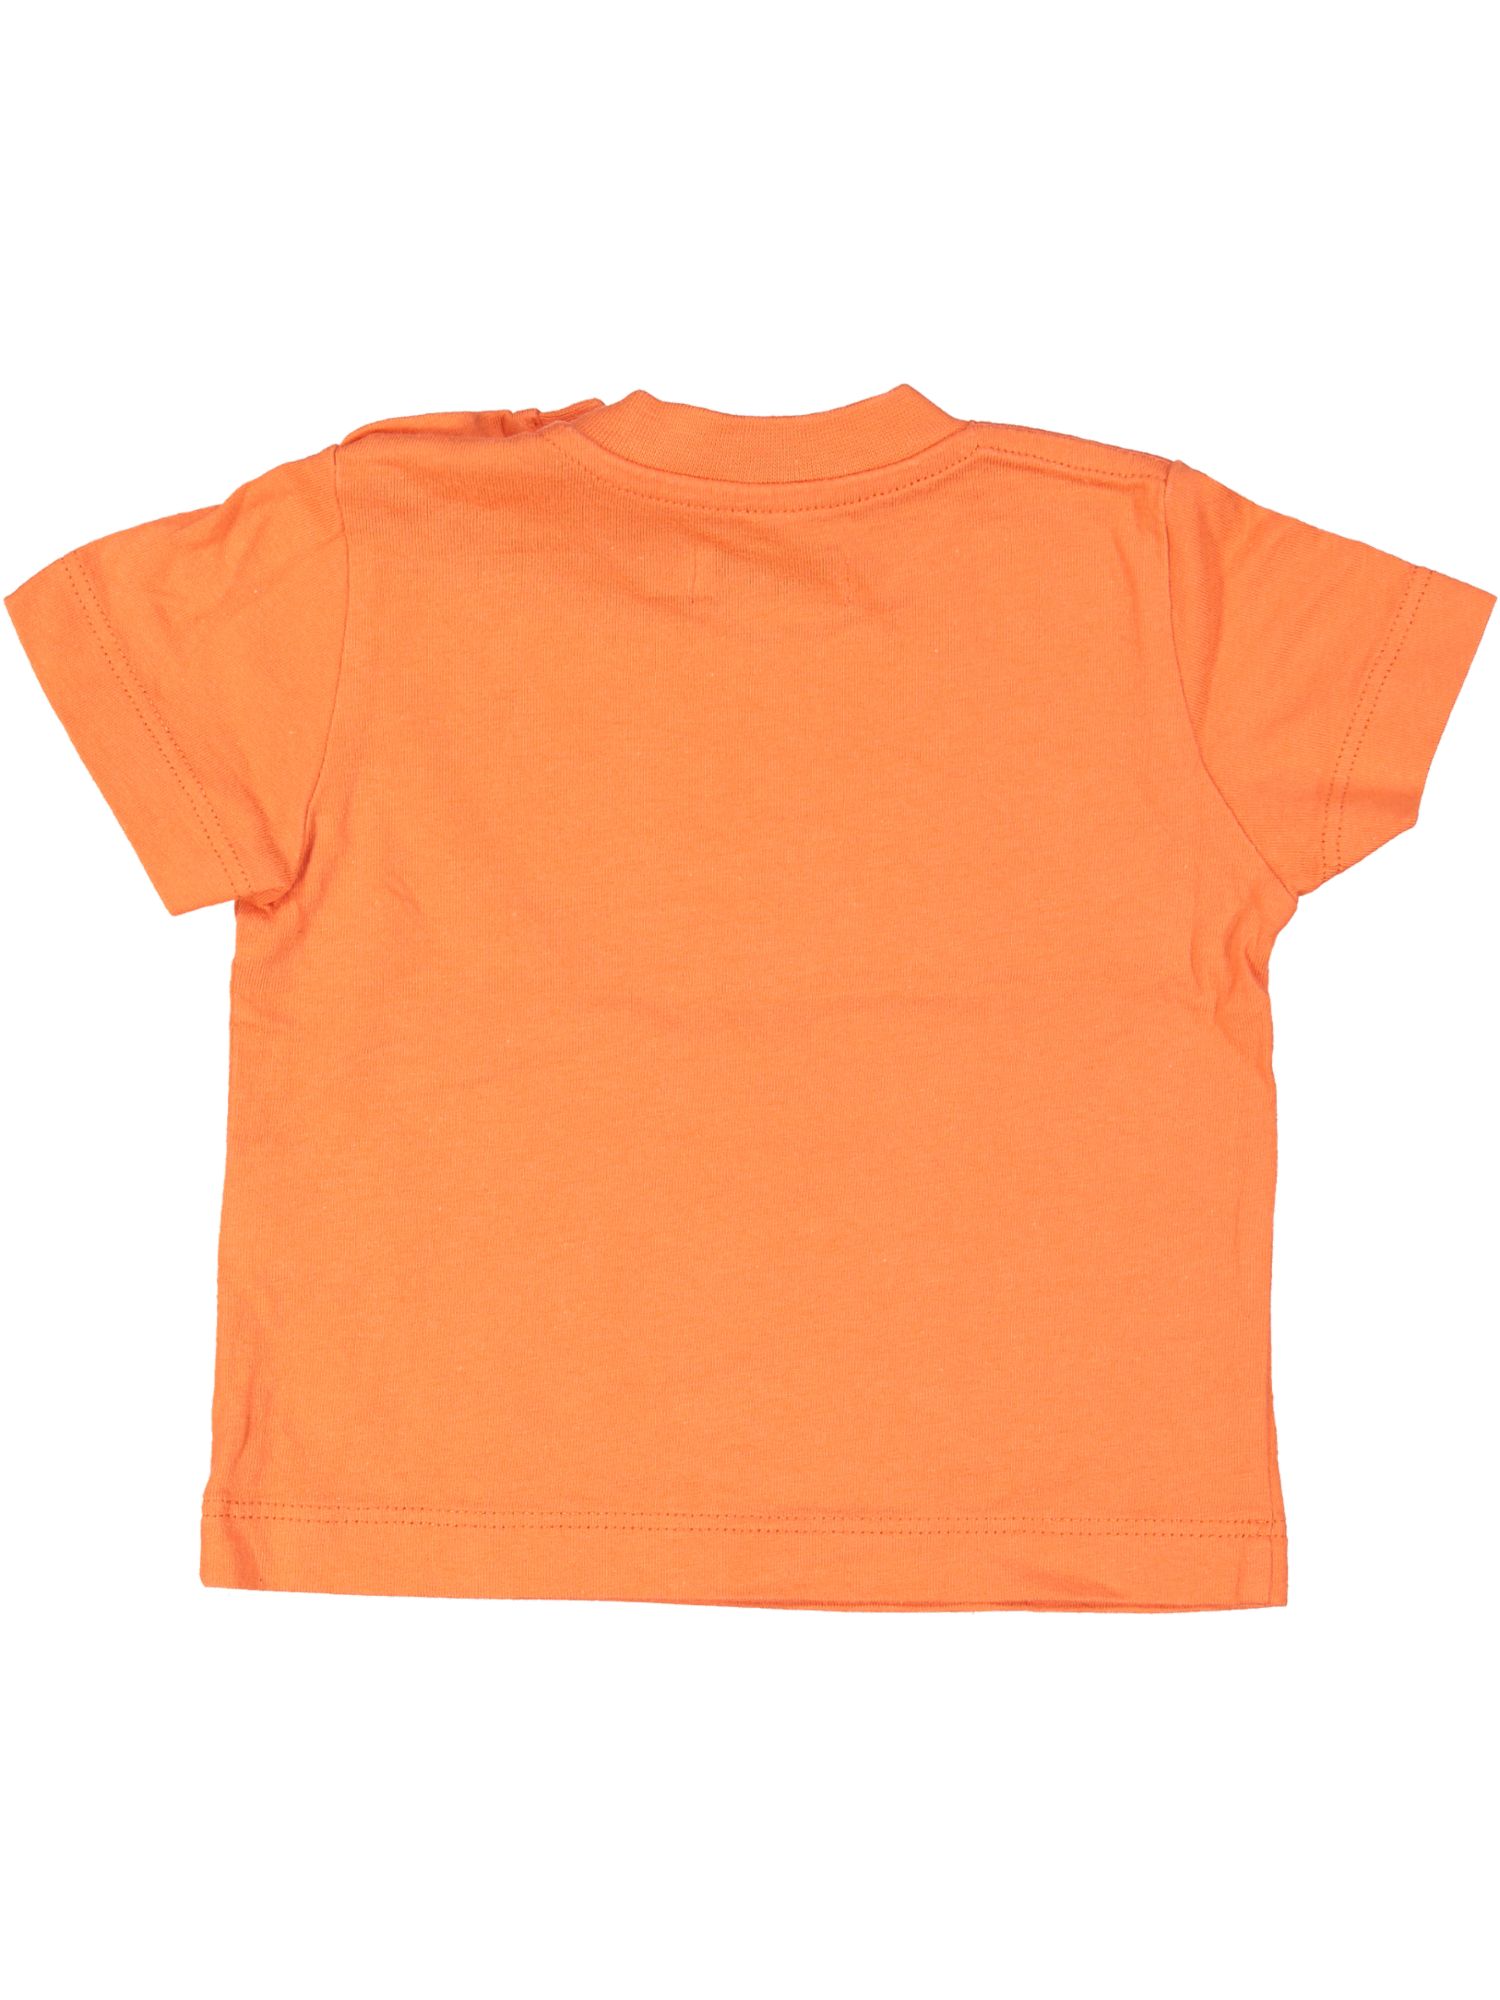 t-shirt oranje racewagen  06m